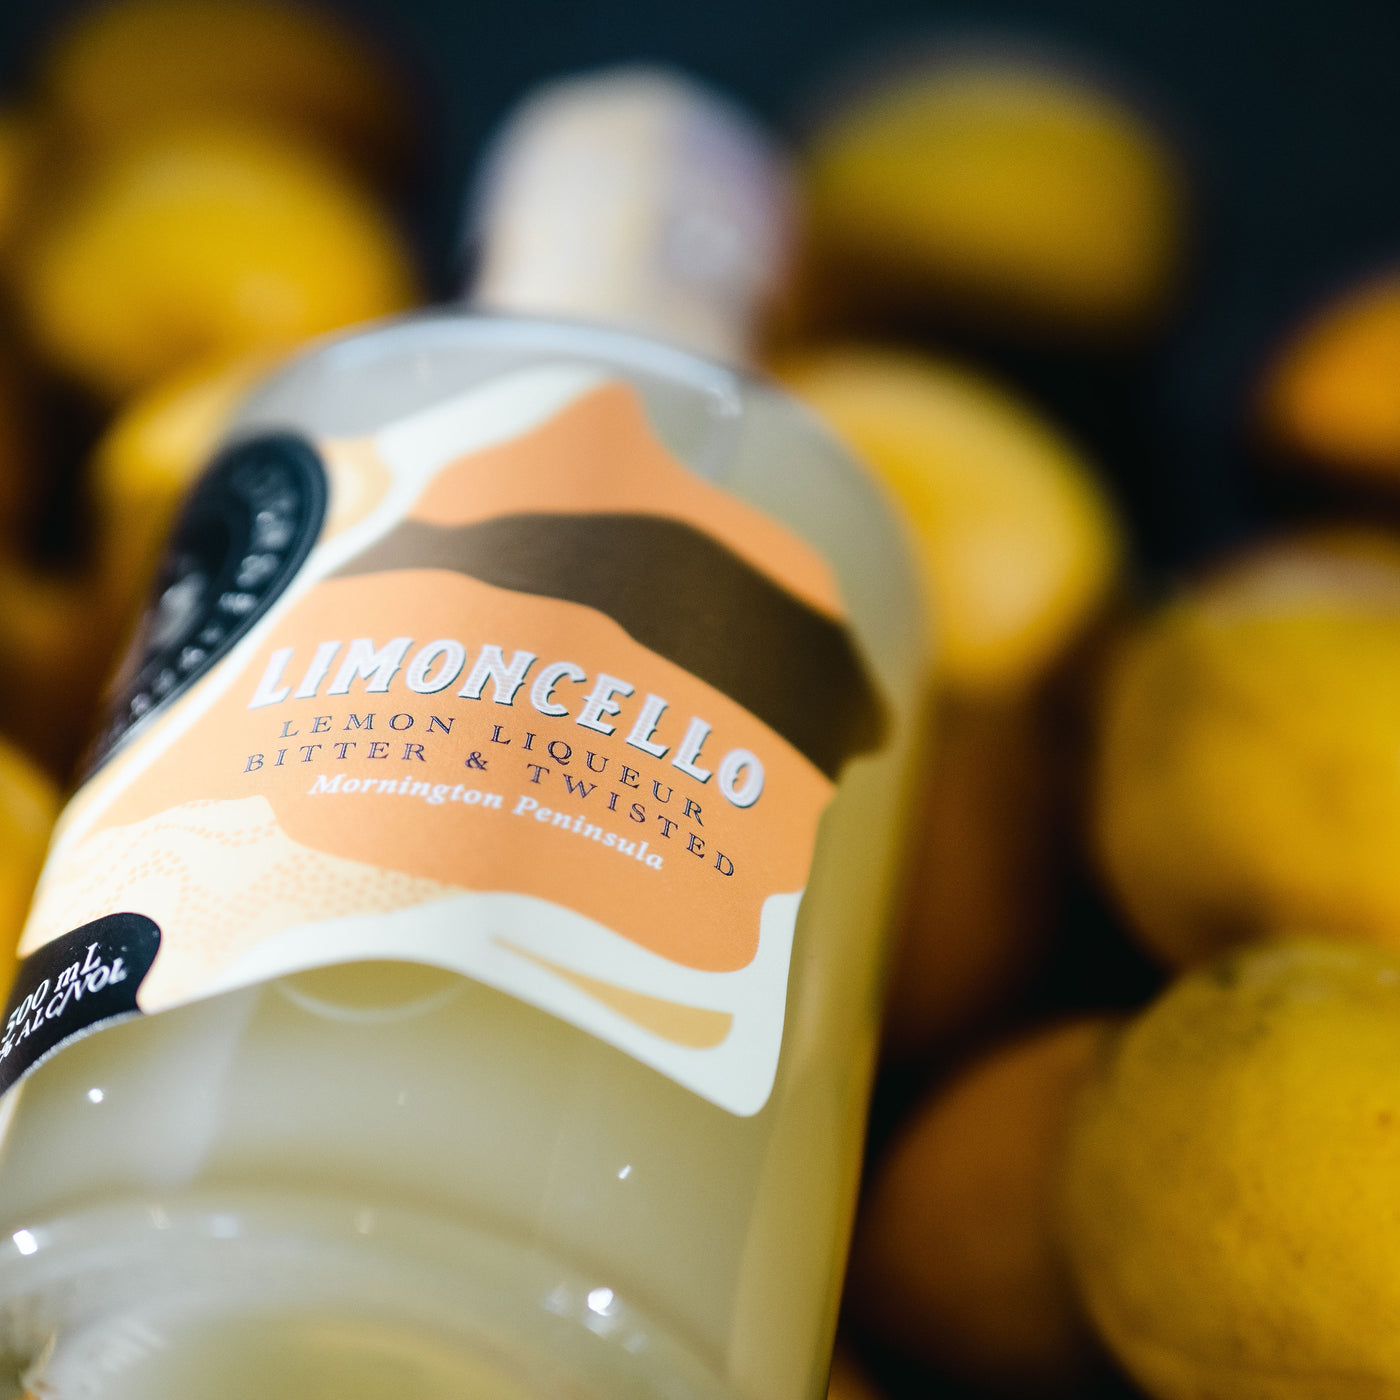 Bass & Flinders Distillery Limoncello Lemon Liqueur Bitter and Twisted label